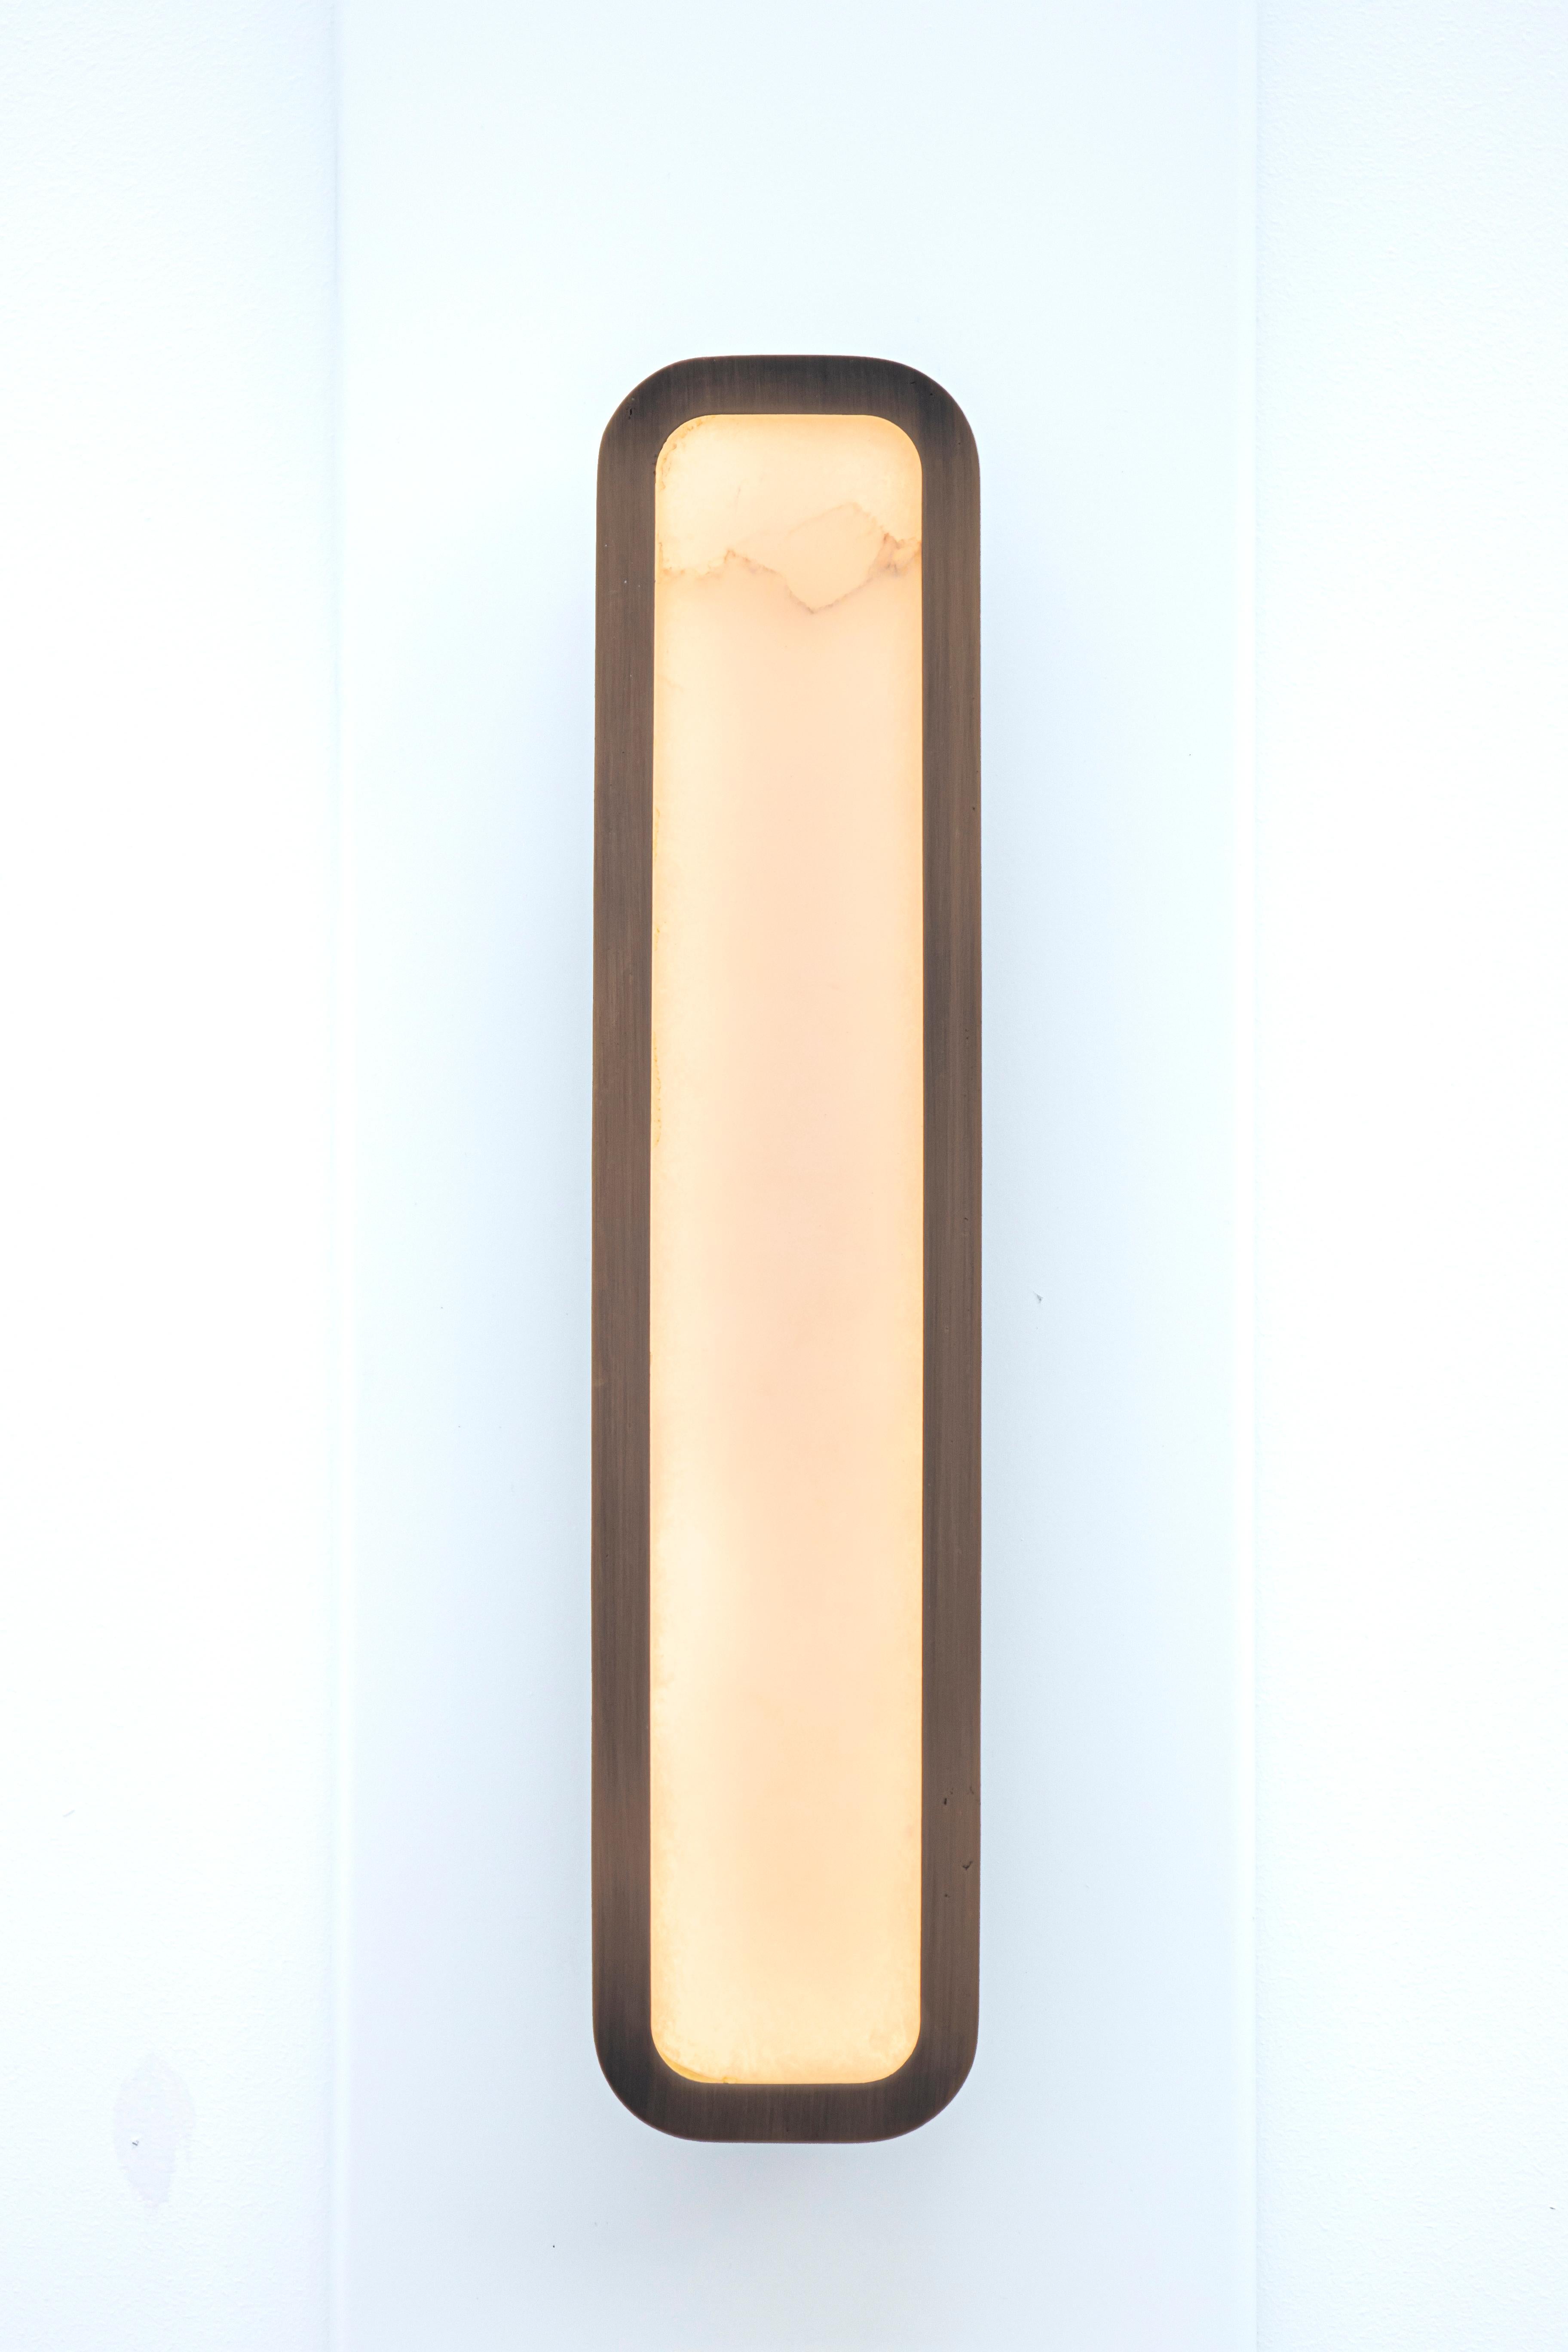 Hublot wall lamp by Entrelacs
Designer: Yves Macheret
Materials: Patinated bronze, alabaster
Dimensions: 10.9 x 2.95 x 50 cm

Handmade in France.
Body lamp patinates bronze, protective varnish - Alabaster diffuser
220-240V / 50-60hz / 24V -